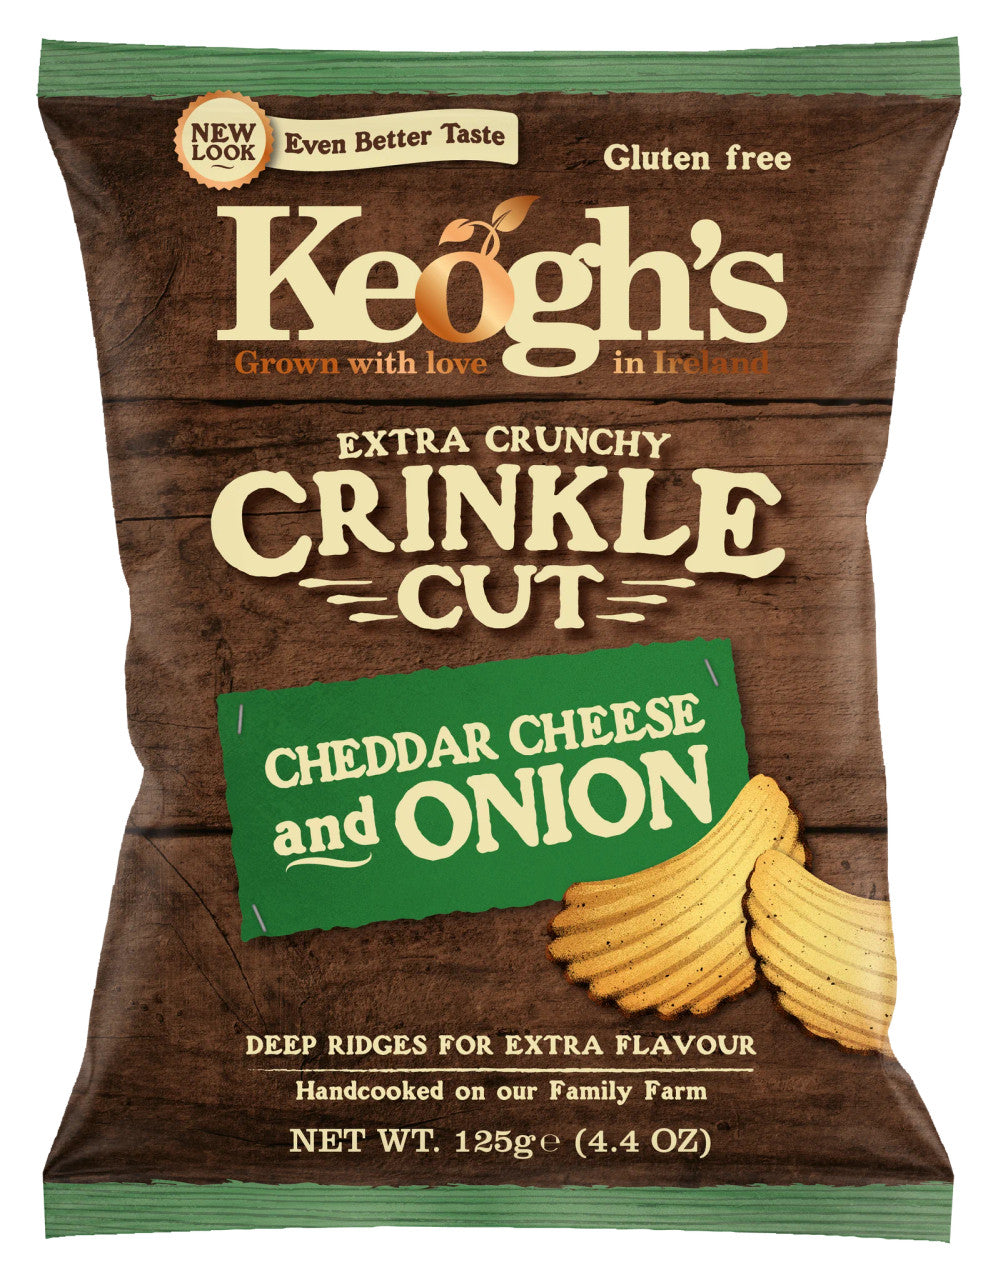 Keogh's Crinkle Cut Cheddar & Onion Crinkle Crisps.